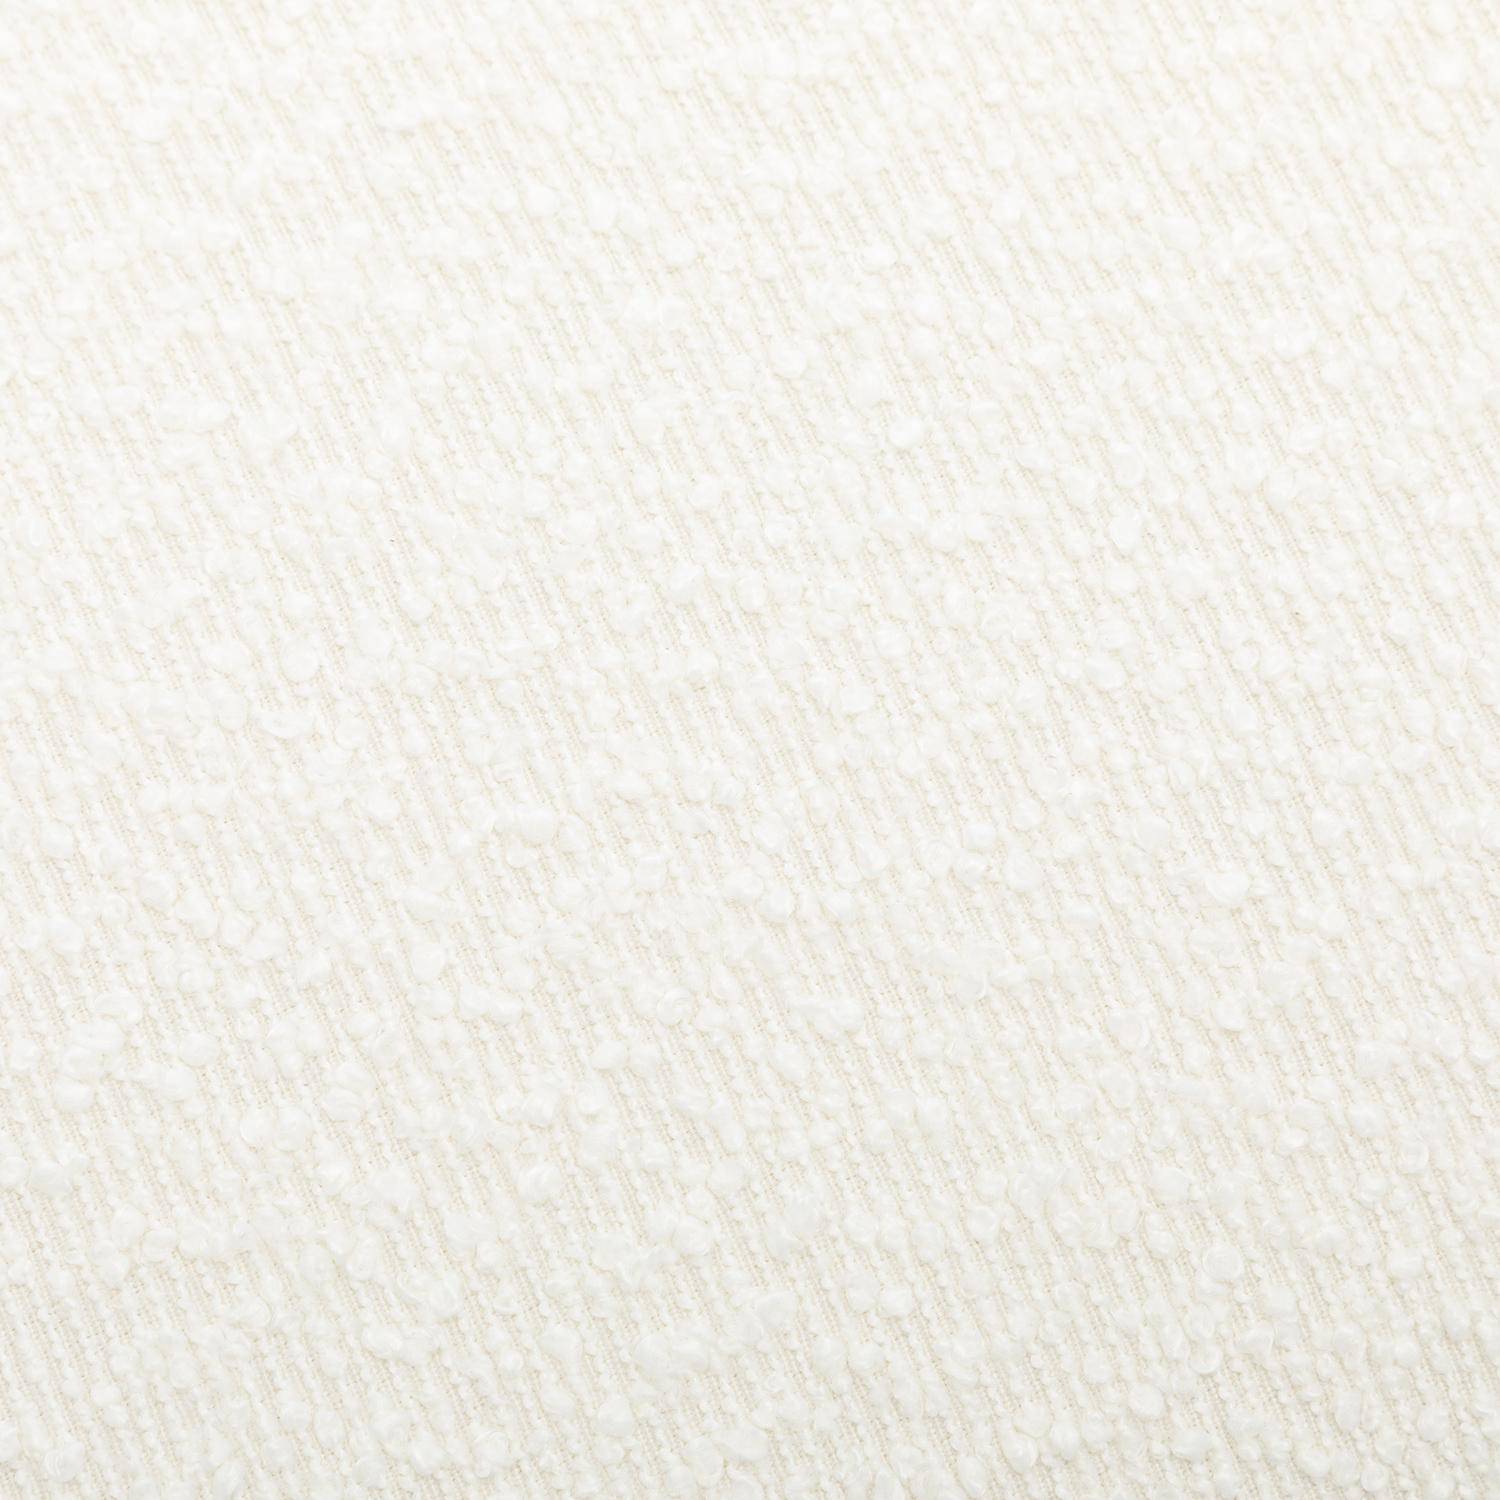 Taburete puf rizado texturado blanco A 44 x P 44 x Alt 42cm -SHAWN,sweeek,Photo5